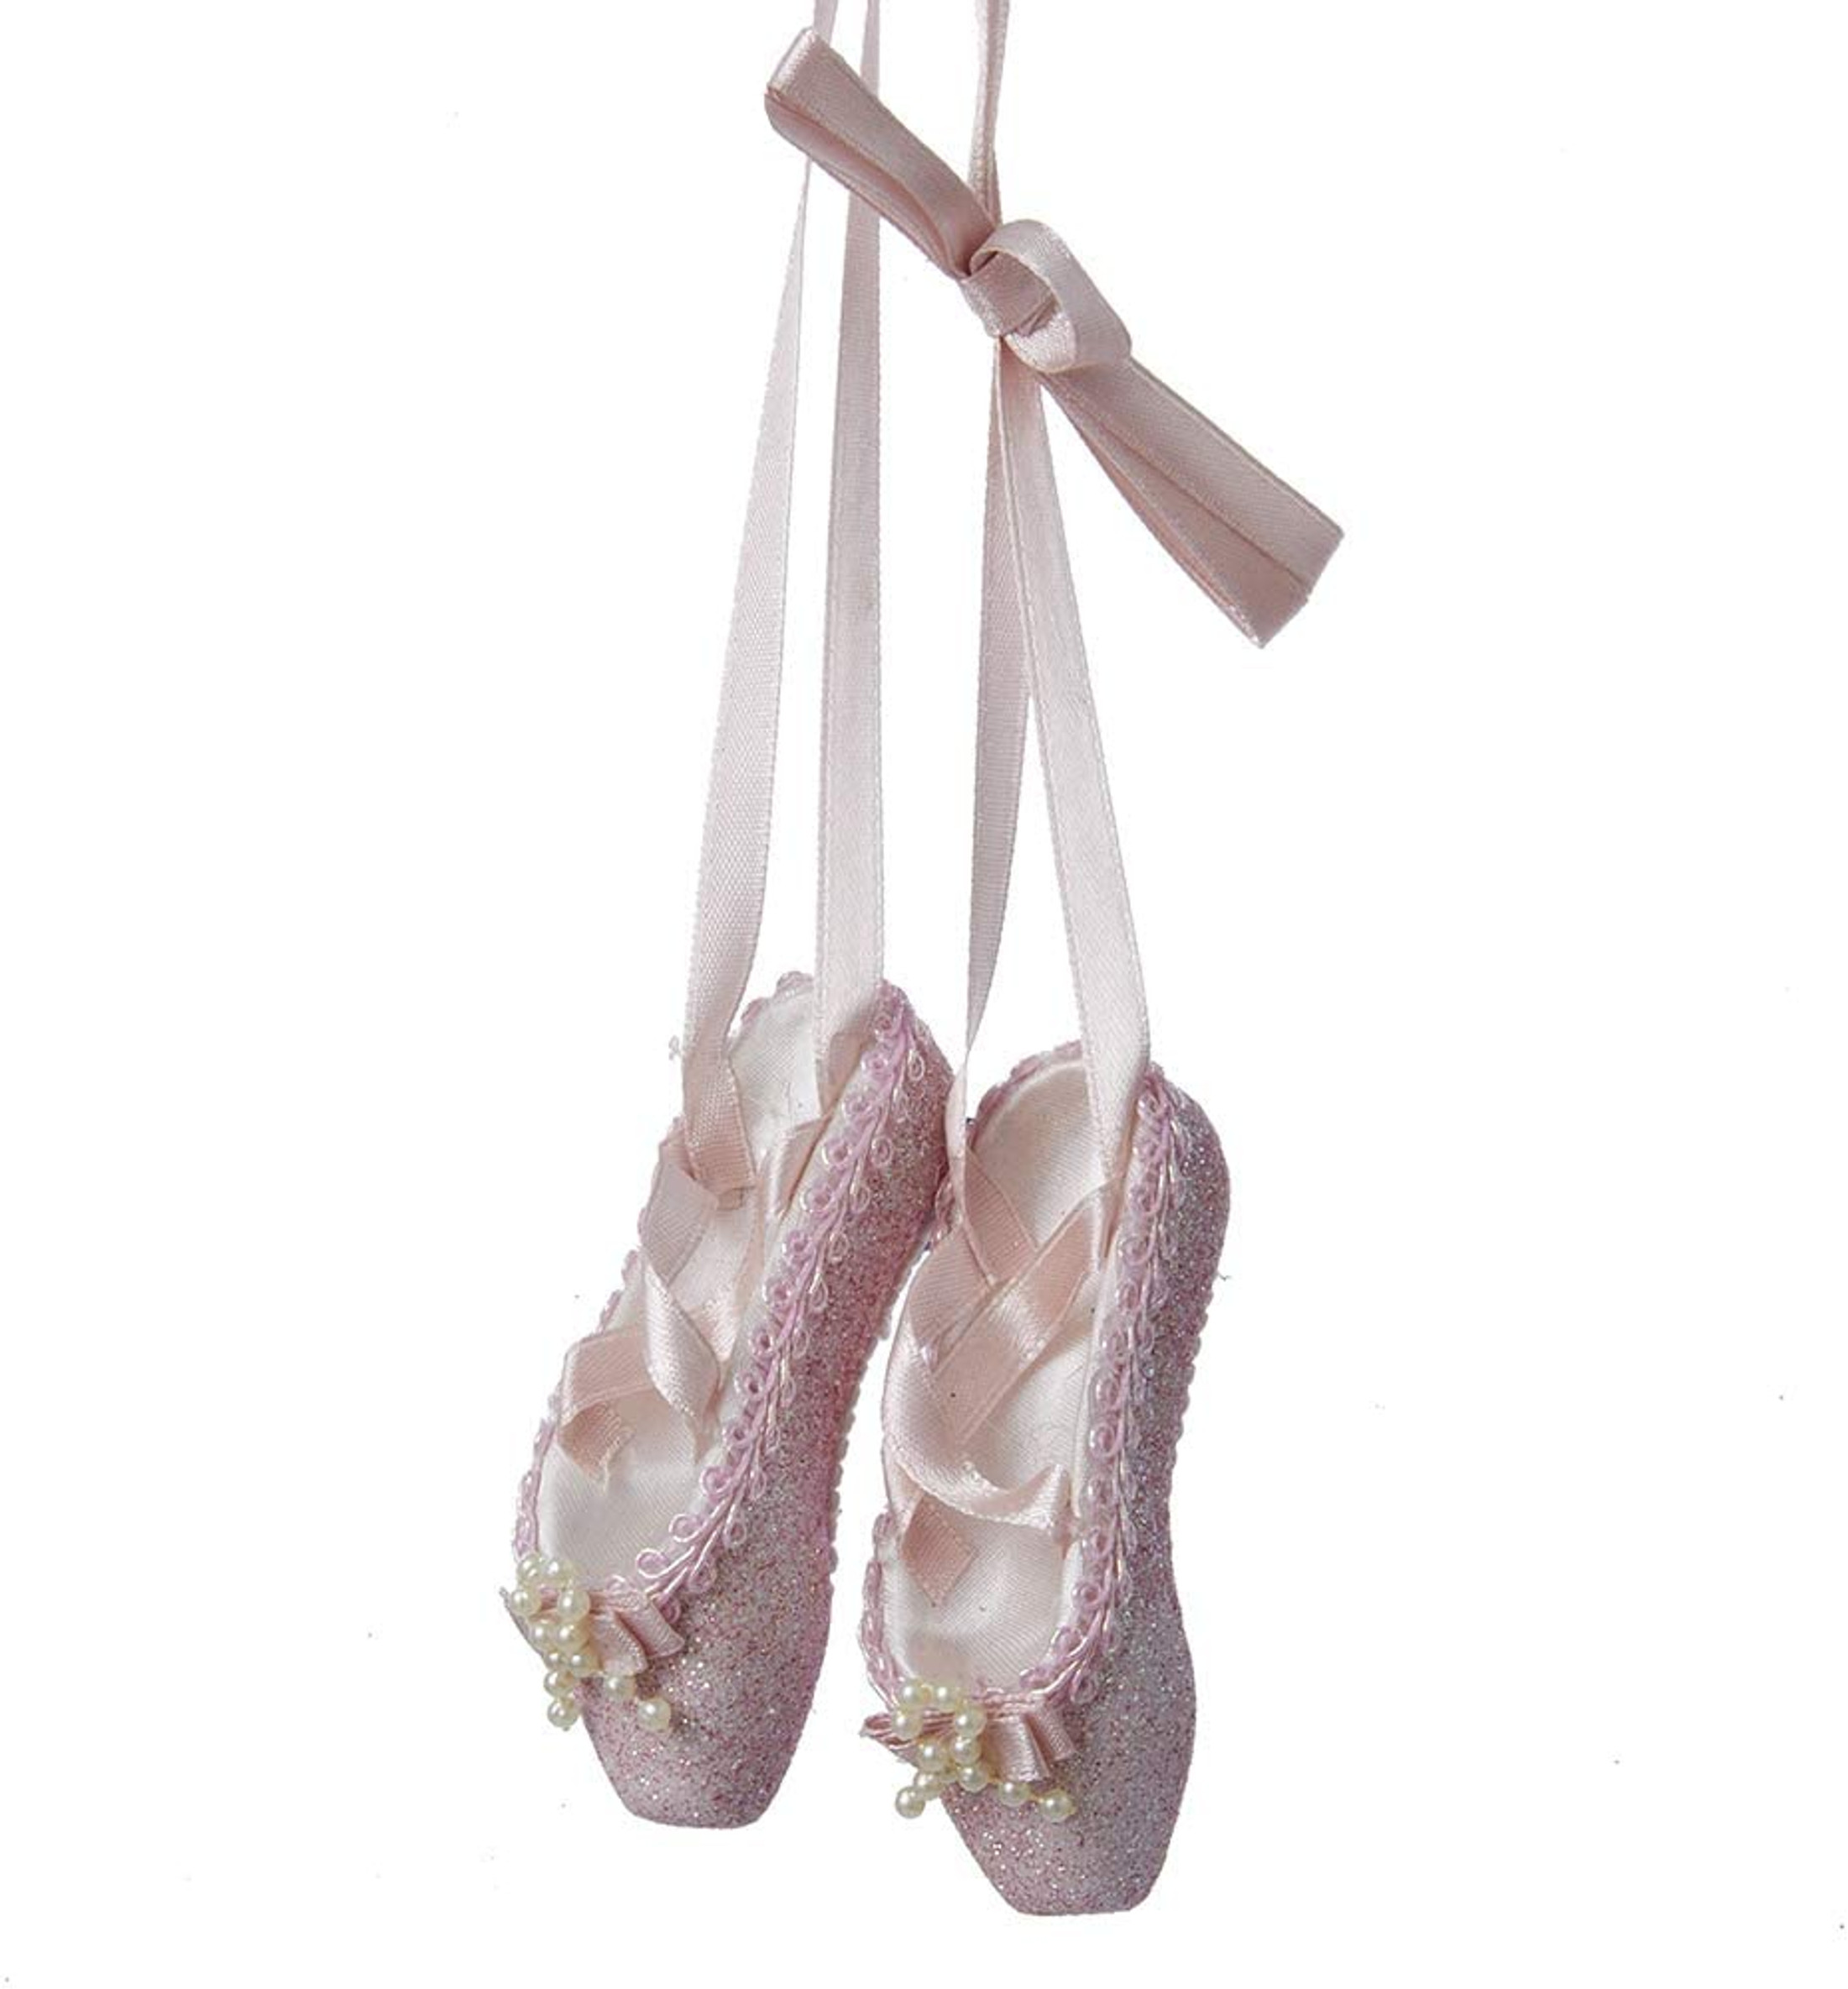 Kurt Adler Pink Glitter Hanging Ballet Shoes Christmas Ornament, 8"